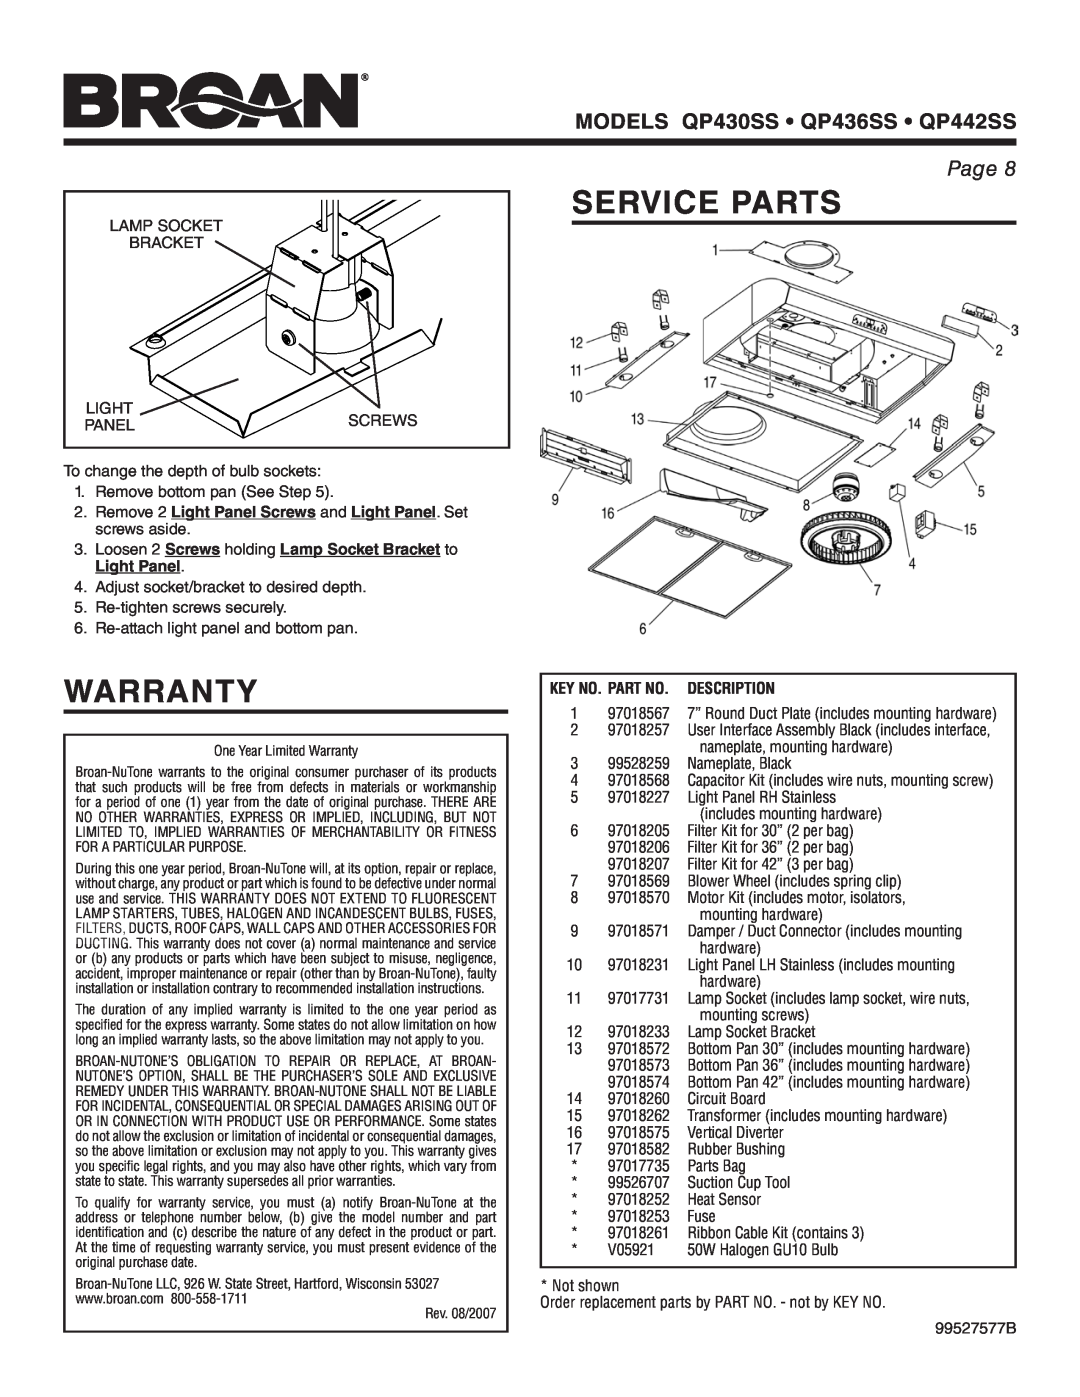 Broan warranty Warranty, Service Parts, Key No. Part No, Description, MODELS QP430SS • QP436SS • QP442SS, Page 